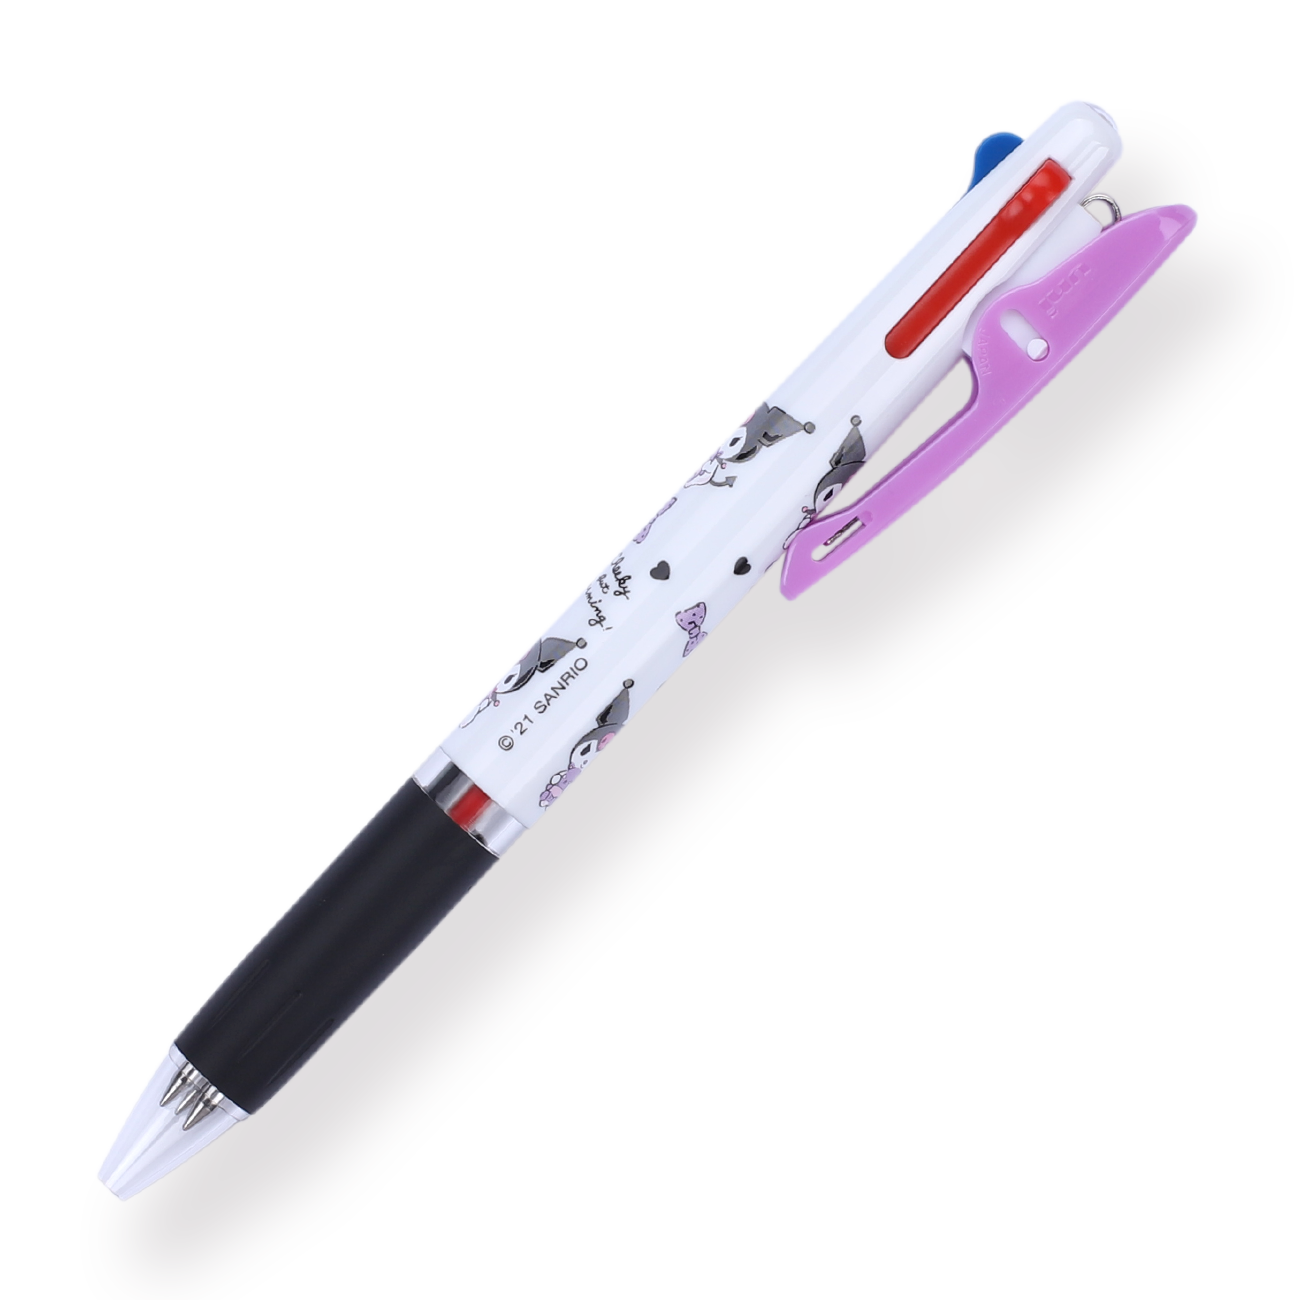 Uni Jetstream x Sanrio 3 Color Limited Edition Multi Pen - 0.5 mm - Kuromi - Stationery Pal